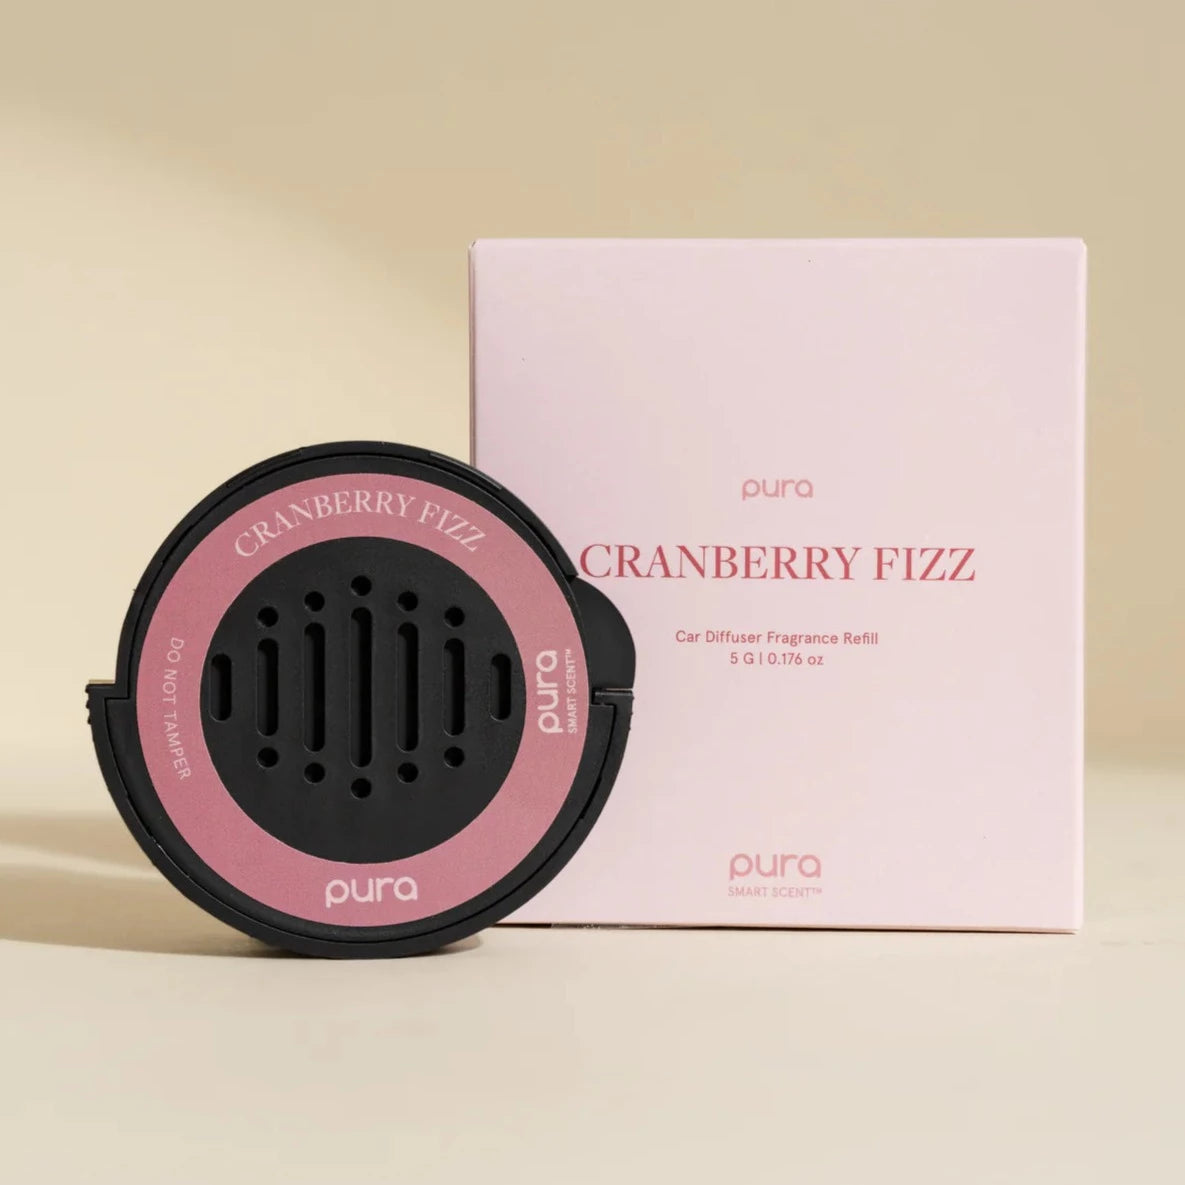 Cranberry Fizz Pura Car Diffuser Fragrance Refill - The Preppy Bunny